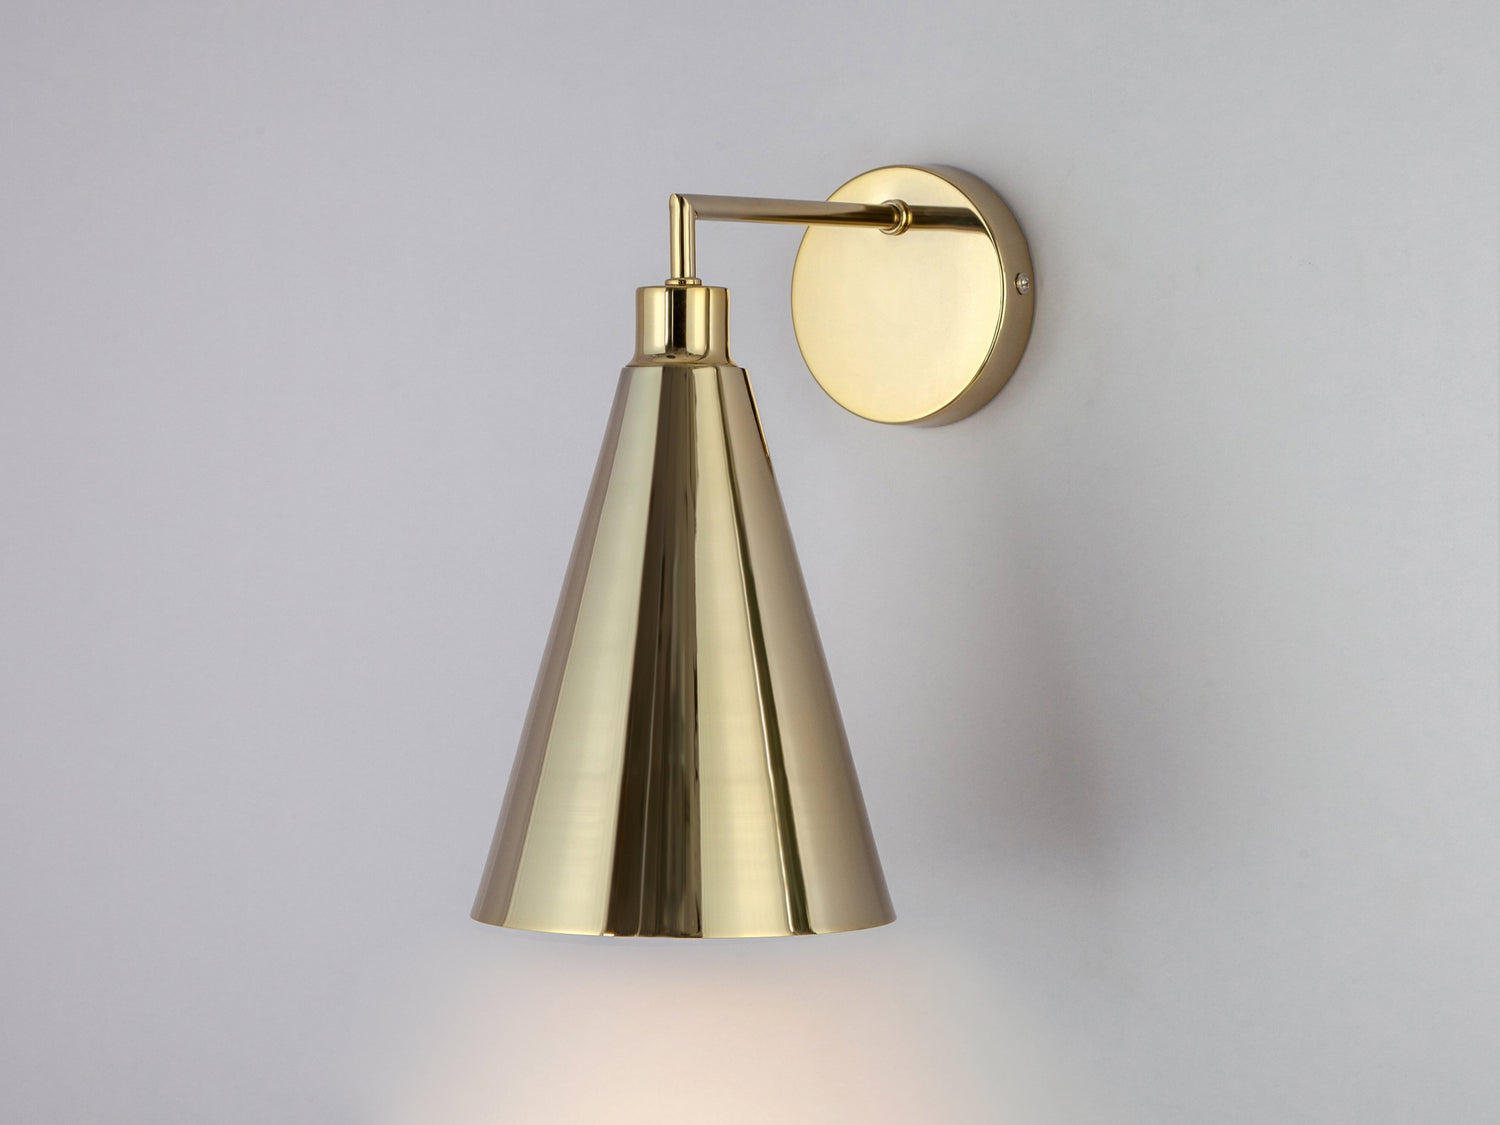 A brass wall fixture suspends a cone-shaped brass metal shade.